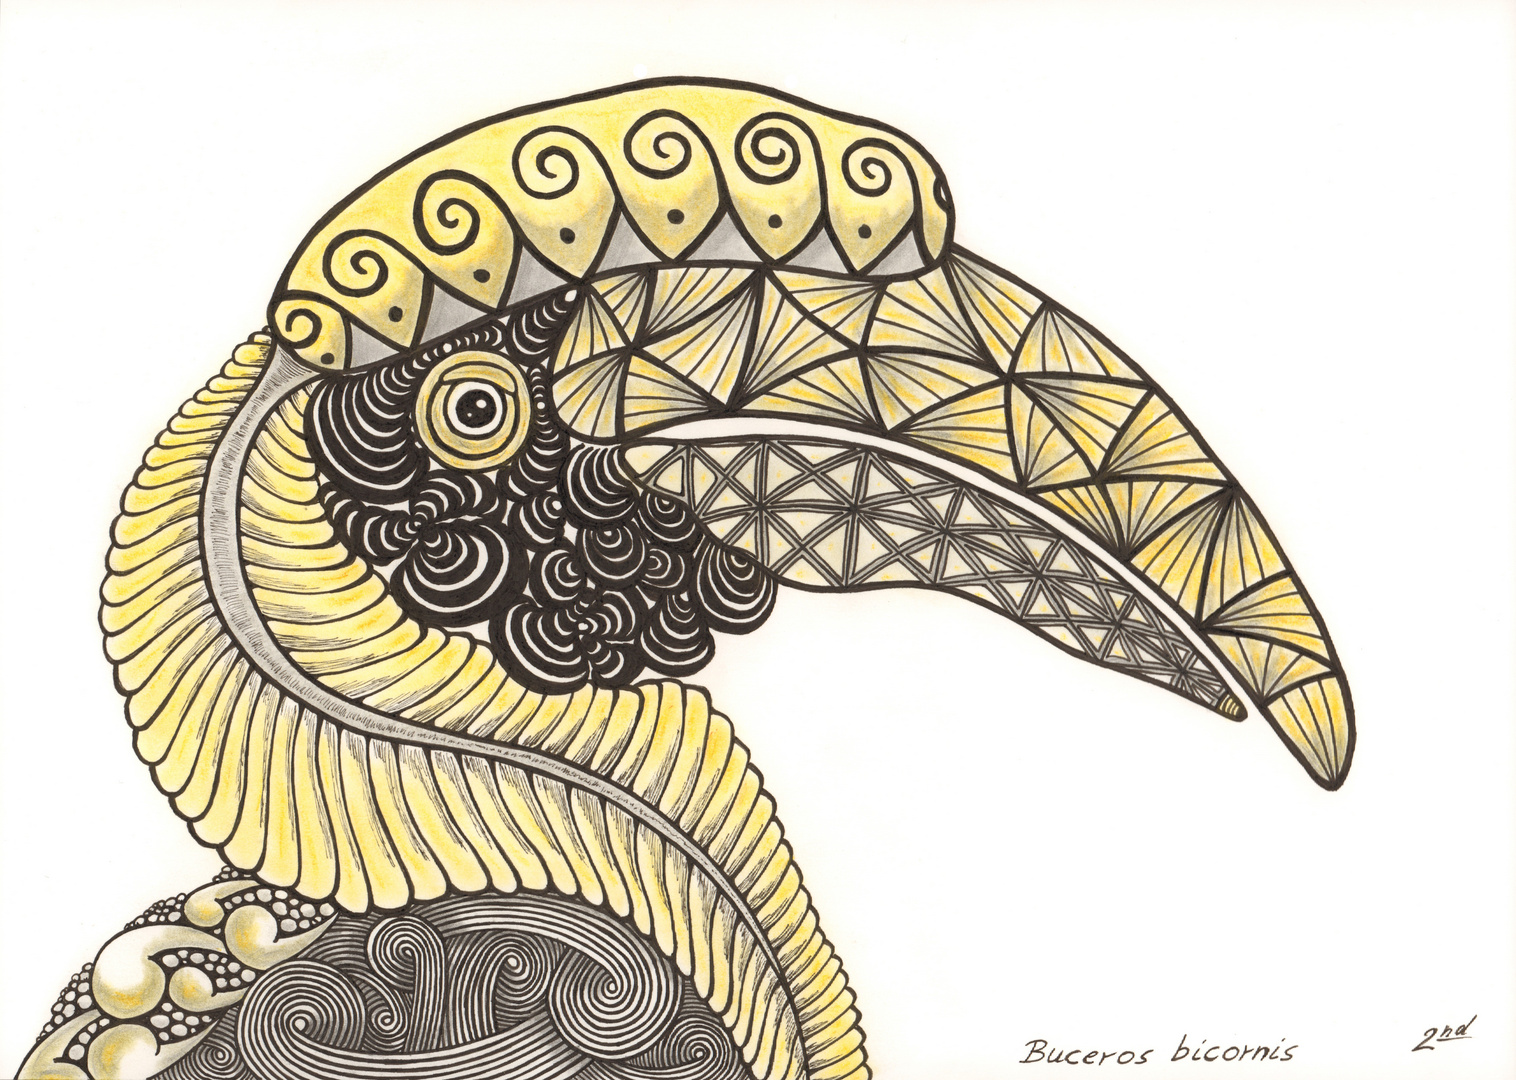 Buceros Bicornis - Doppelhornvogel